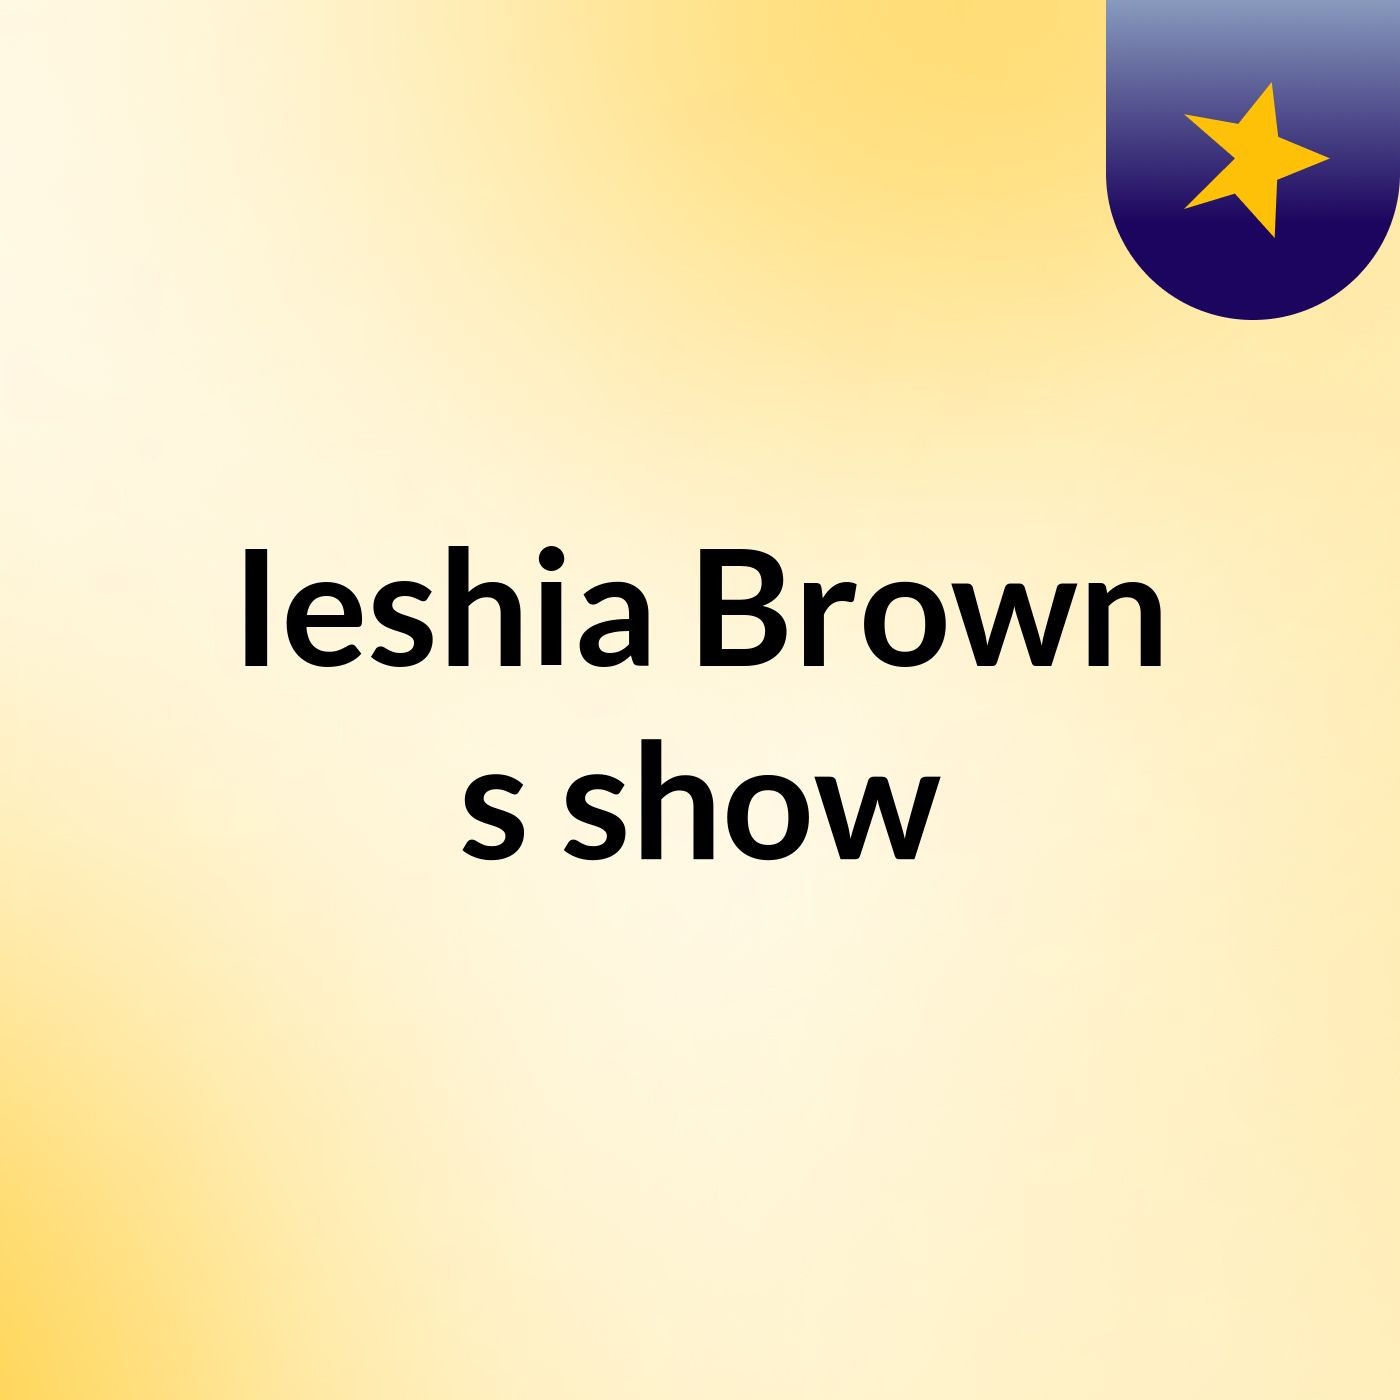 Ieshia Brown's show